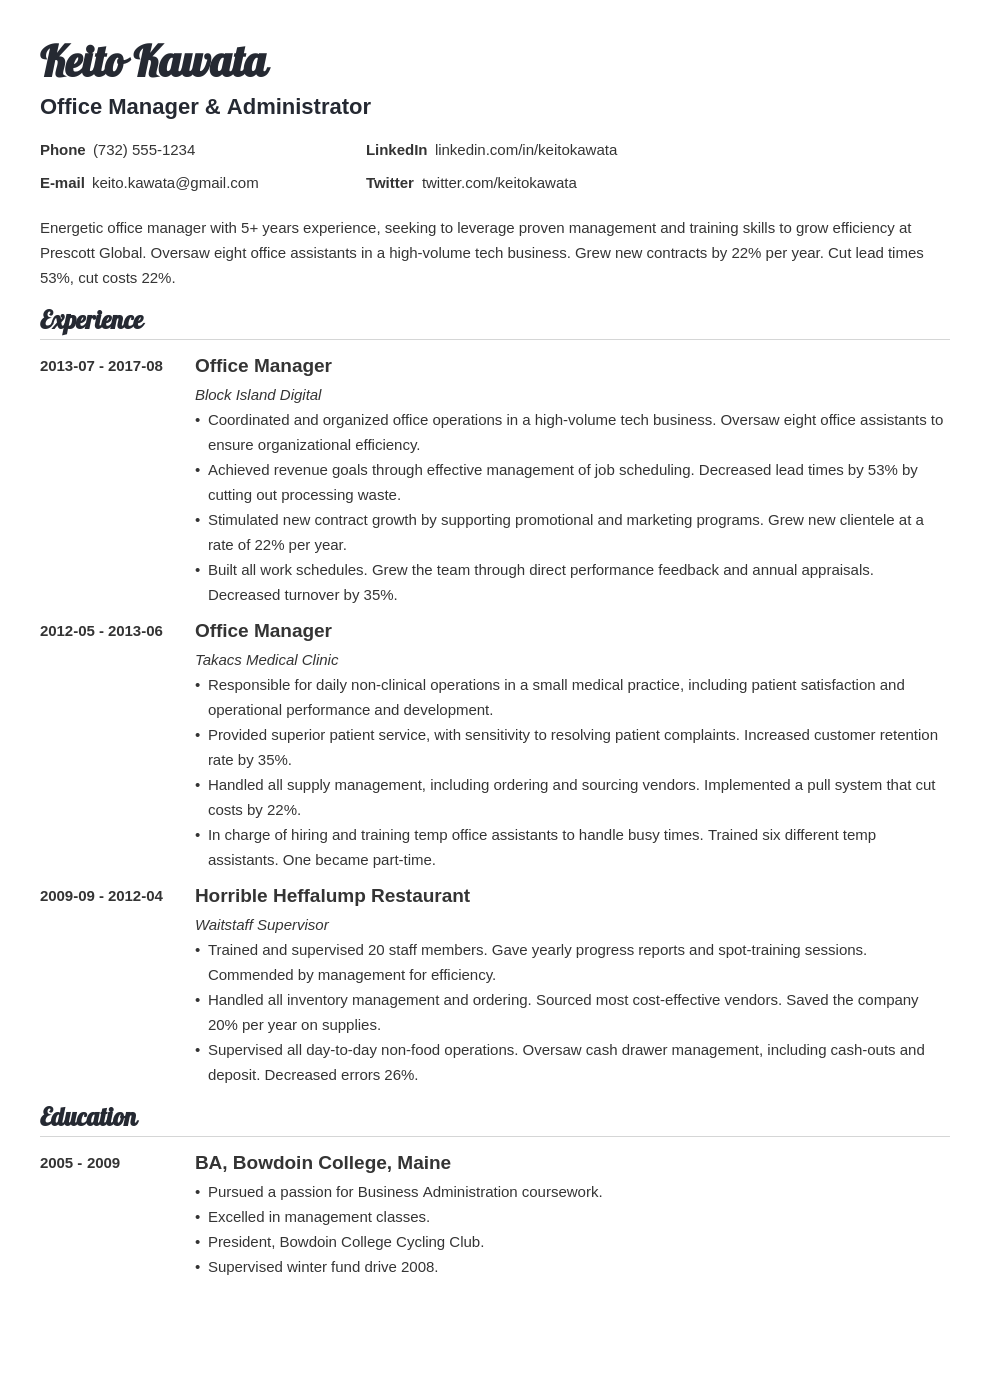 Office Manager Job Description for a Resume: Examples With Office Manager Job Description Template Within Office Manager Job Description Template